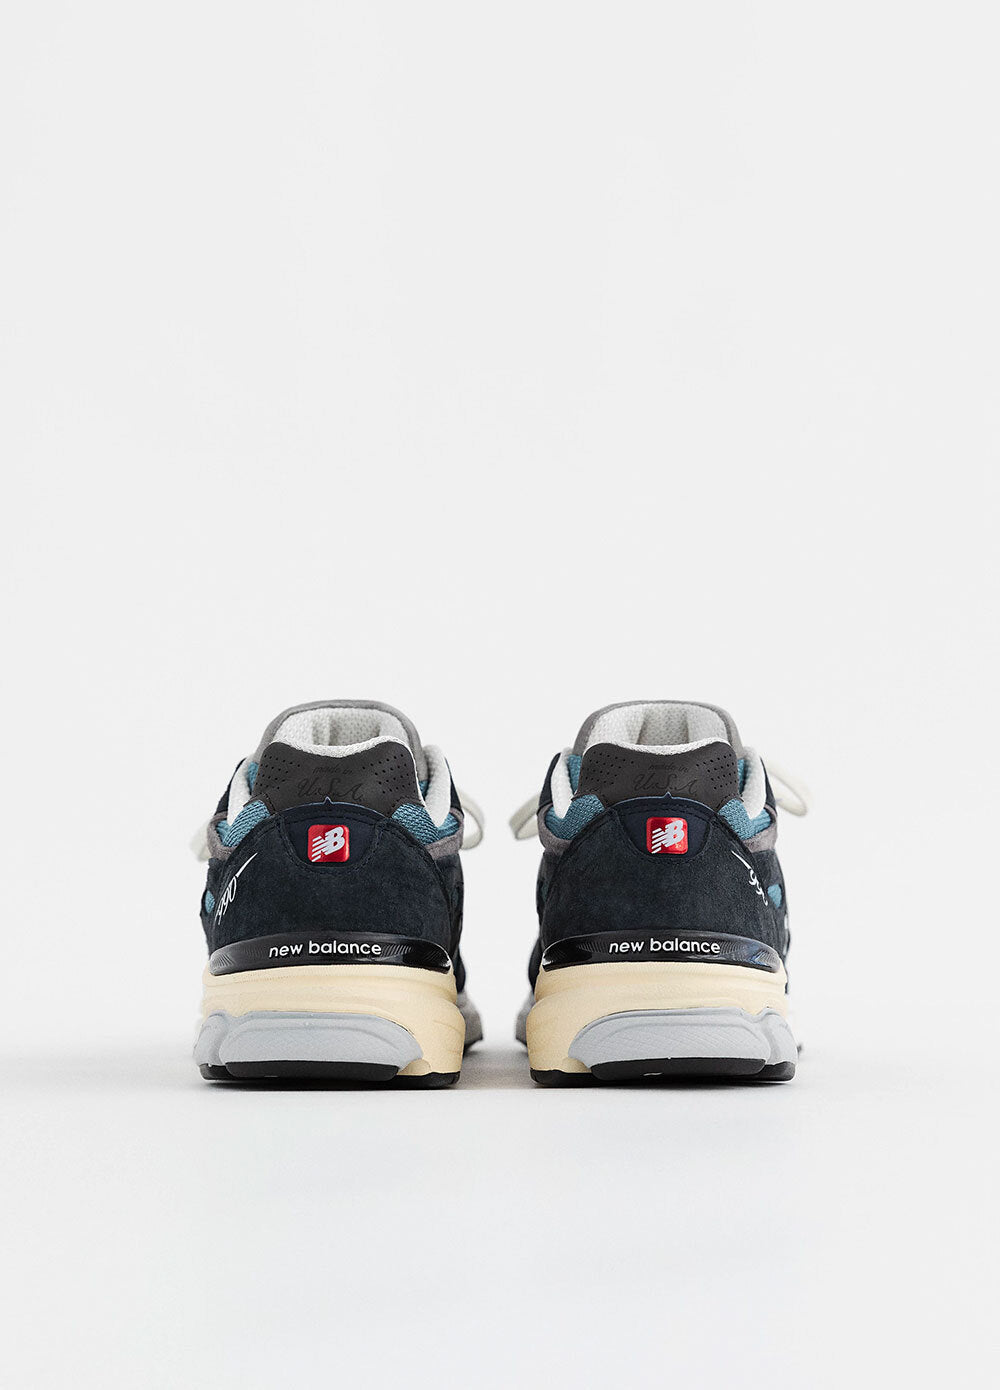 Teddy 990v3 Sneakers